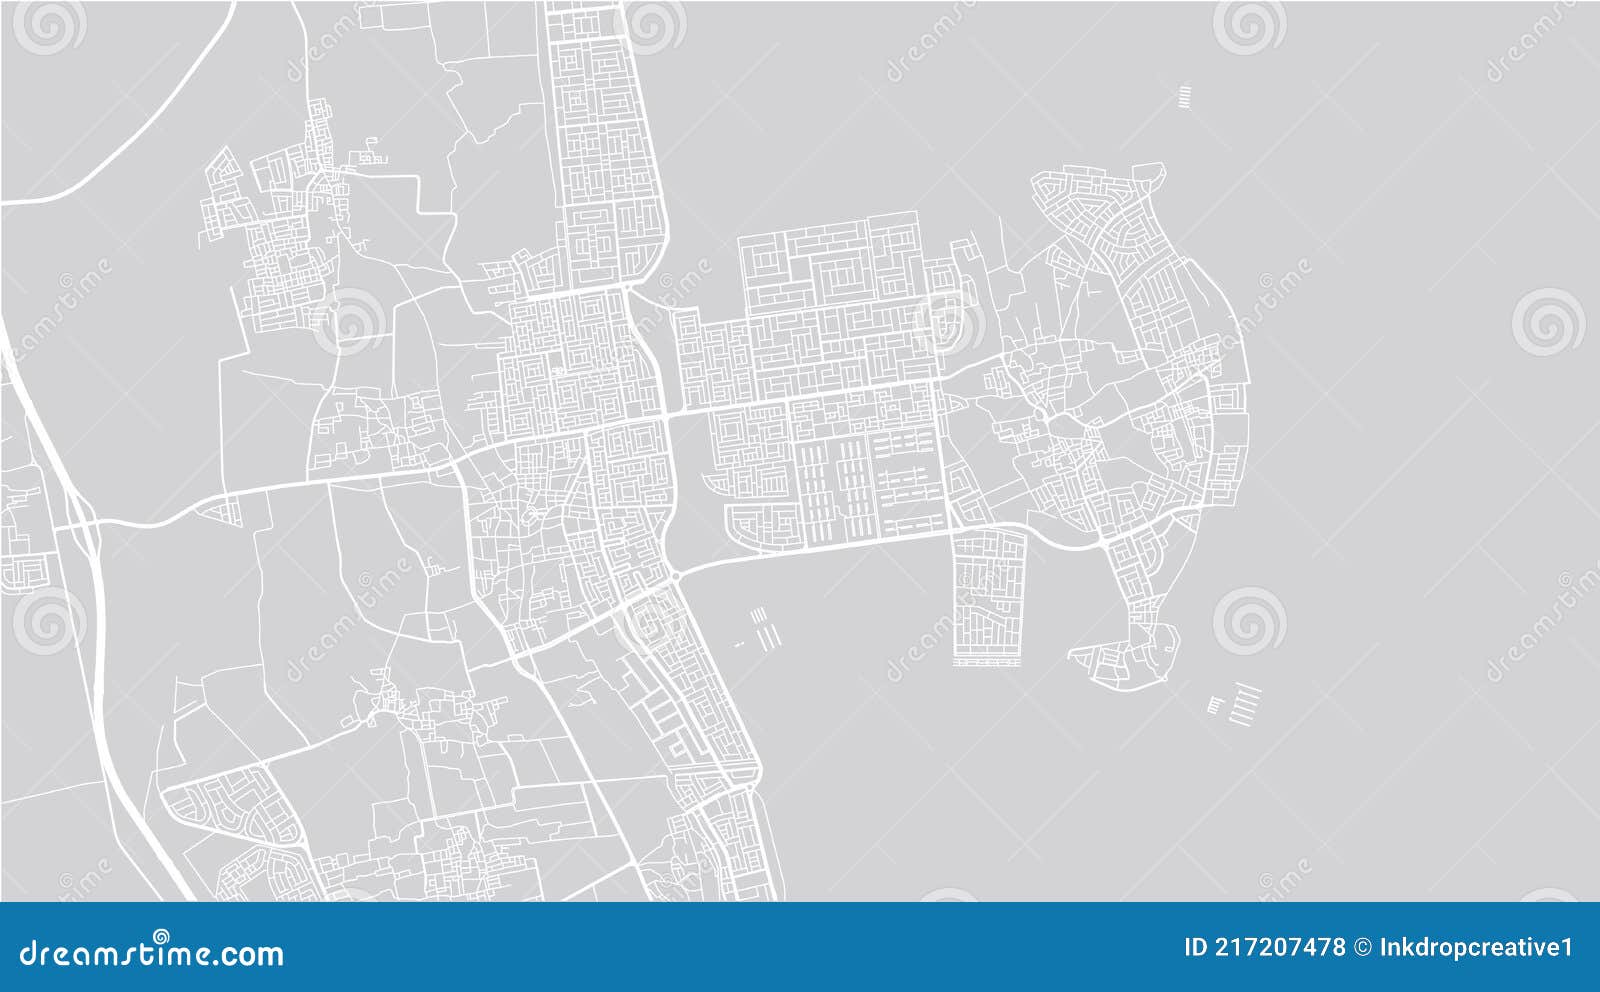 urban  city map of al qatif, saudi arabia, middle east